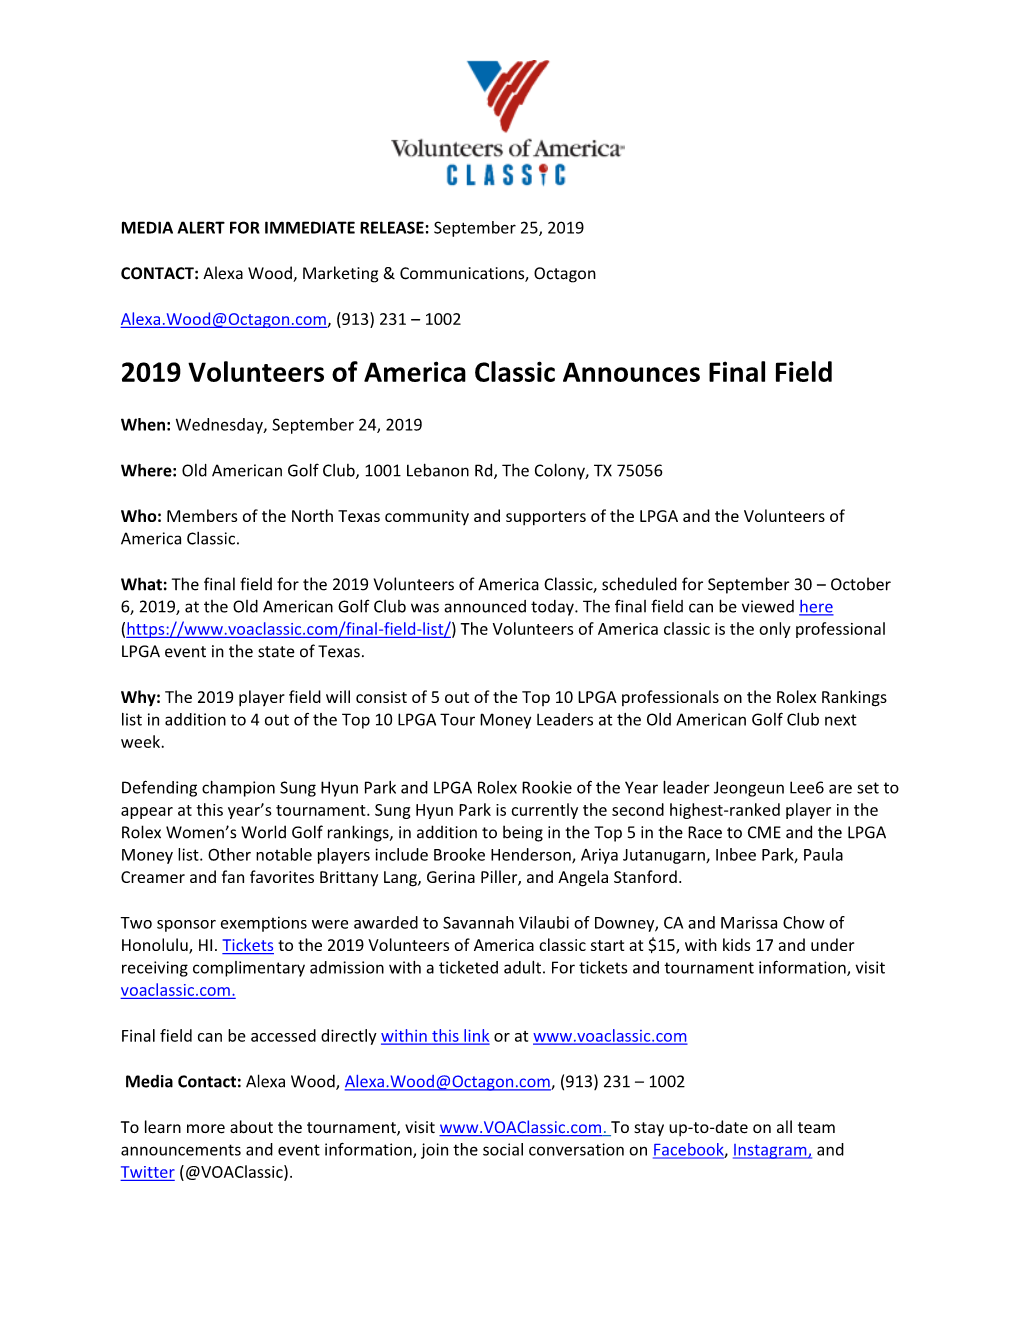 2019 Volunteers of America Classic Announces Final Field